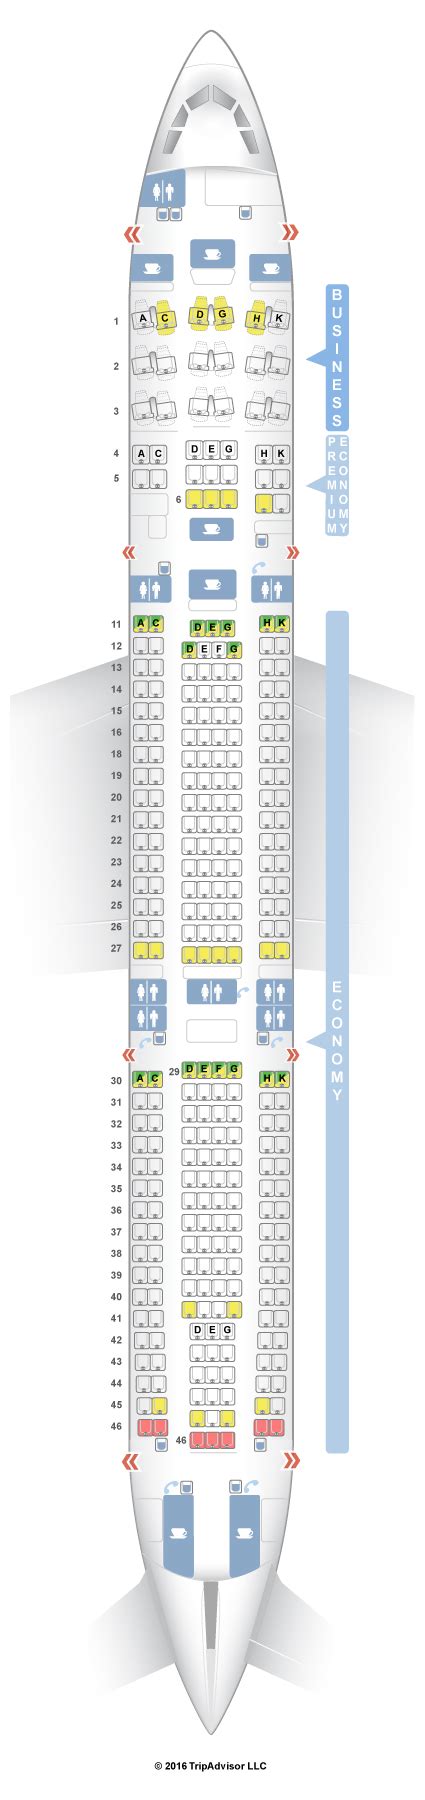 Seatguru Seat Map Lufthansa Airbus A340 300 343 V3 Seatguru